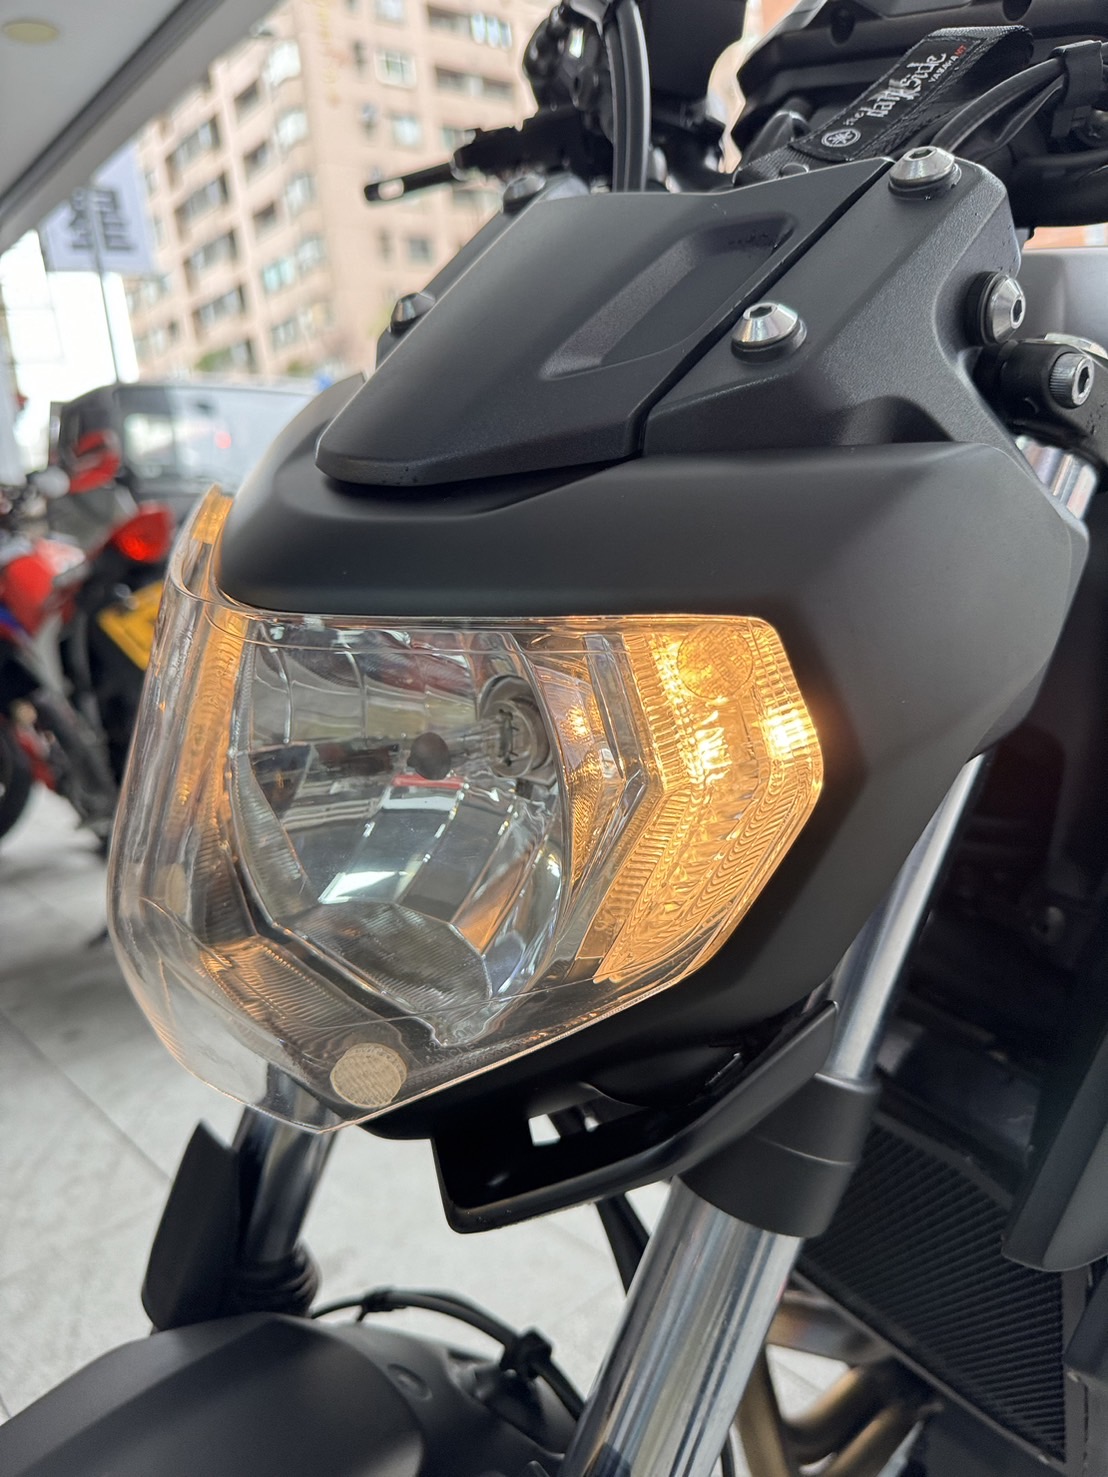 YAMAHA MT-07 - 中古/二手車出售中 (已售出)2018 MT07 公司車 | Yamaha YMS 興旺重車